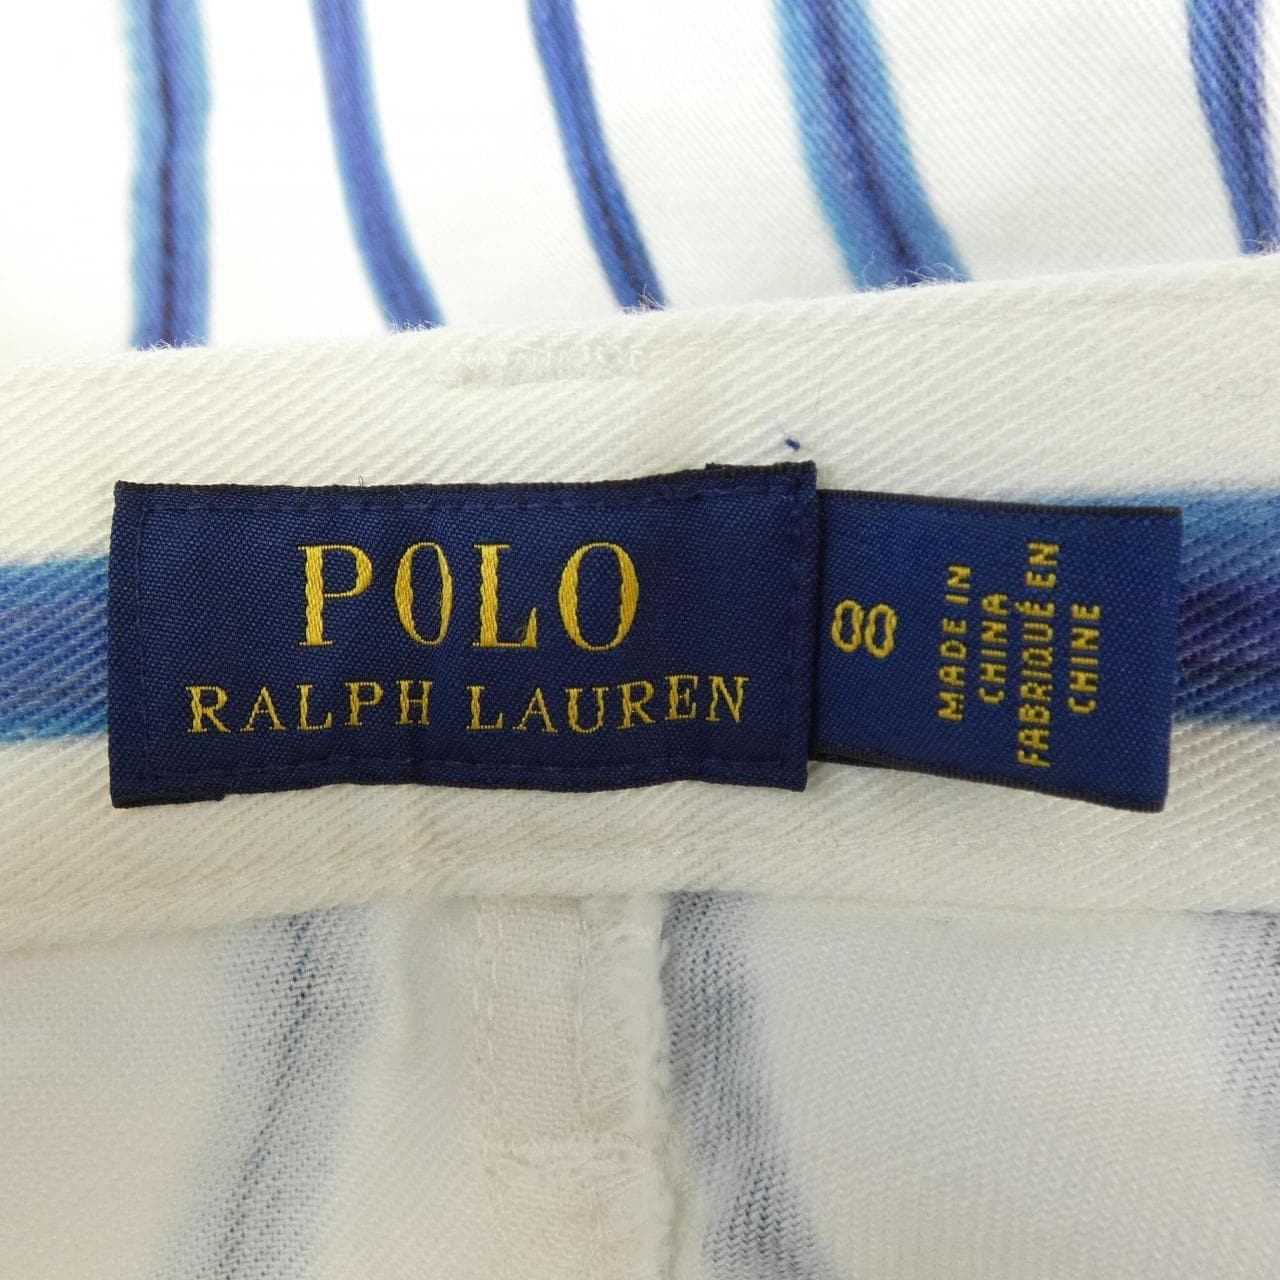 Polo Ralph Lauren POLO RALPH LAUREN pants